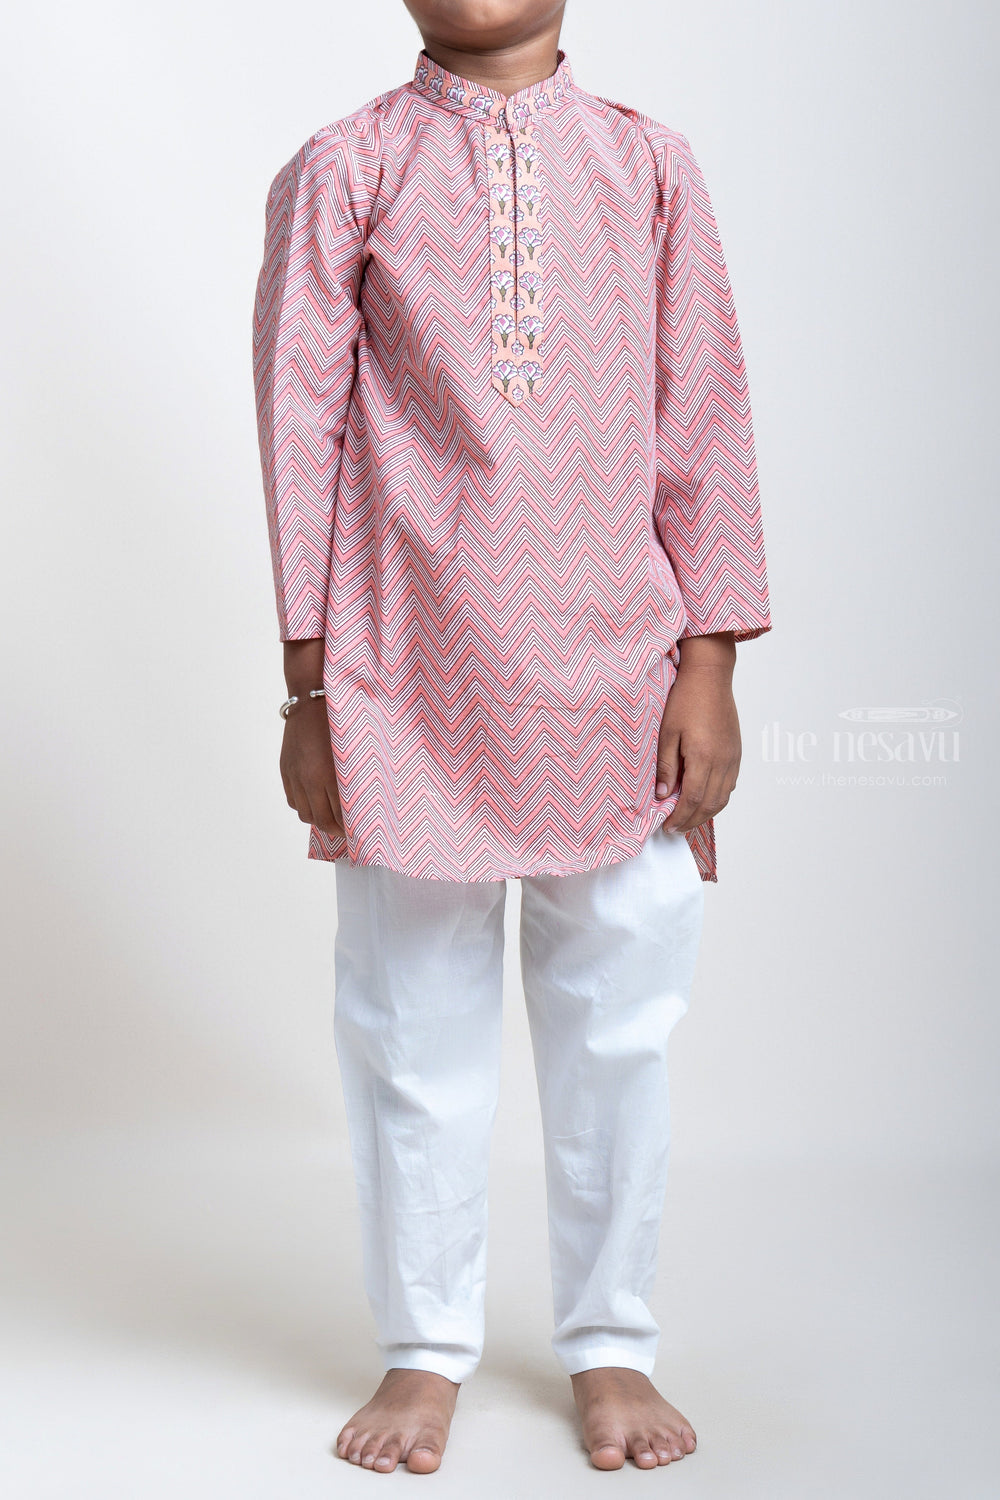 The Nesavu Boys Kurtha Set Ajrak Printed ZigZag Pink Cotton Kurta And White Pyjama For Little Boys psr silks Nesavu